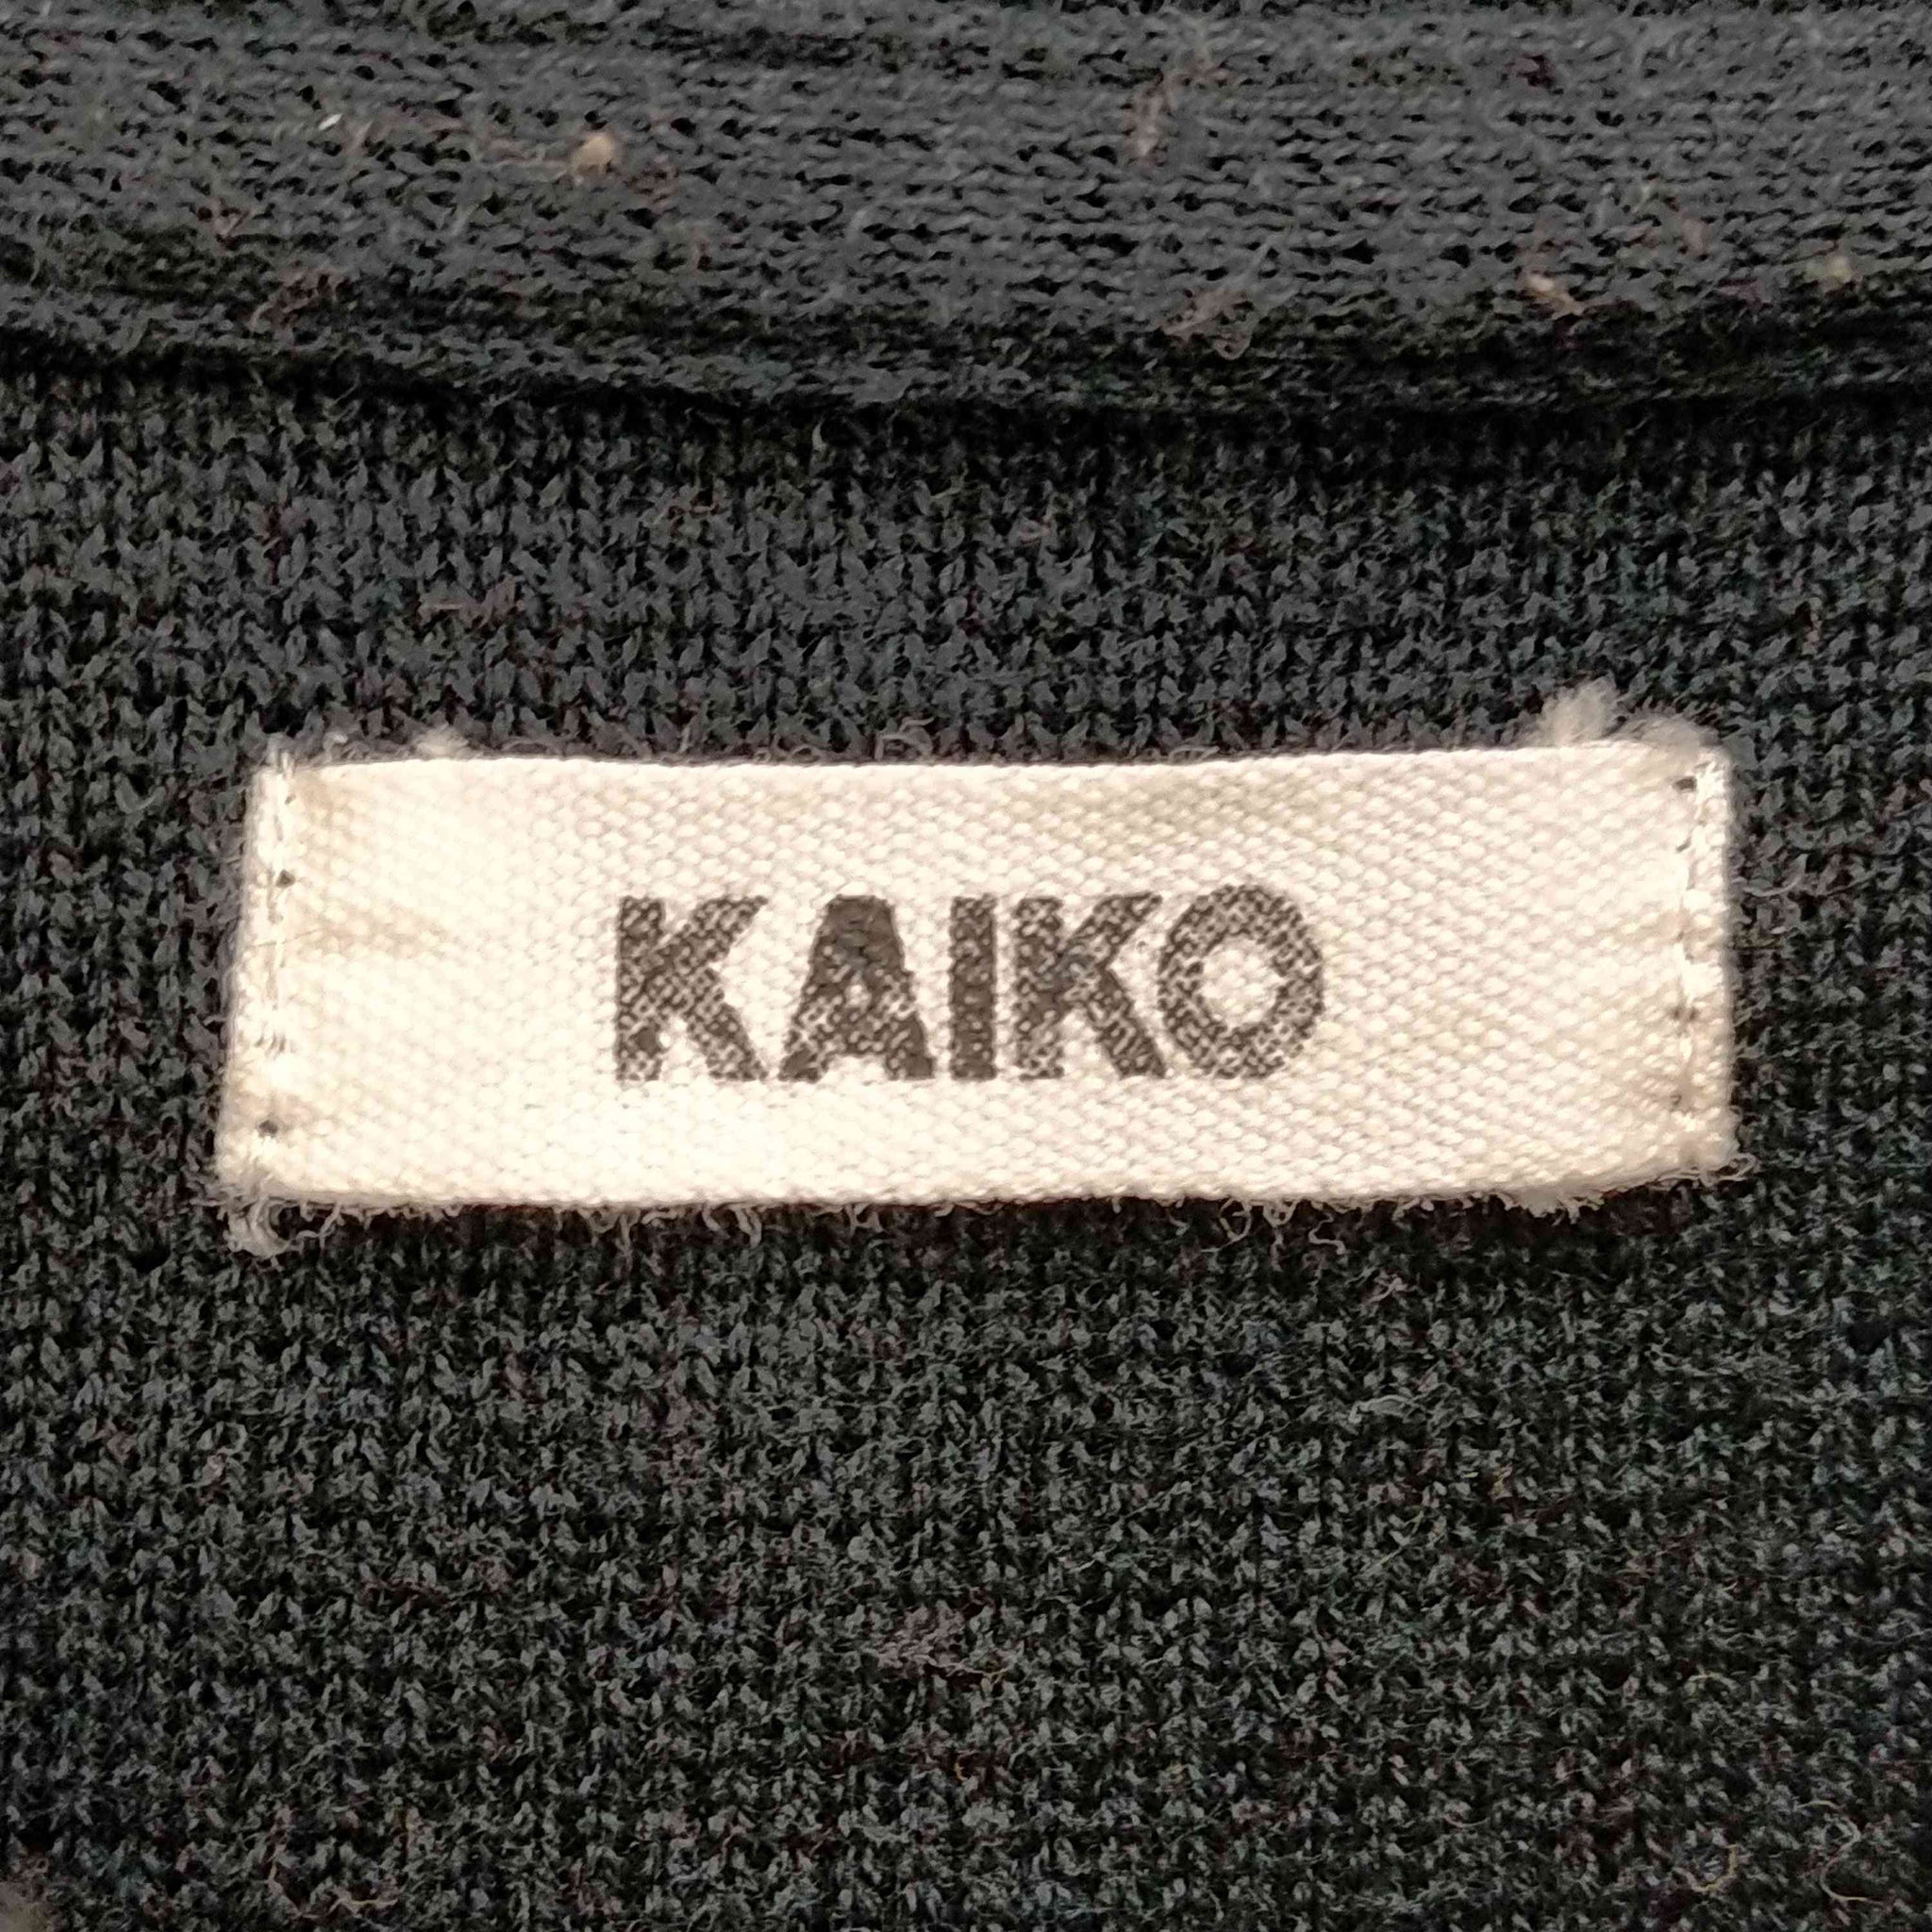 KAIKO(カイコー)ニットポロシャツ